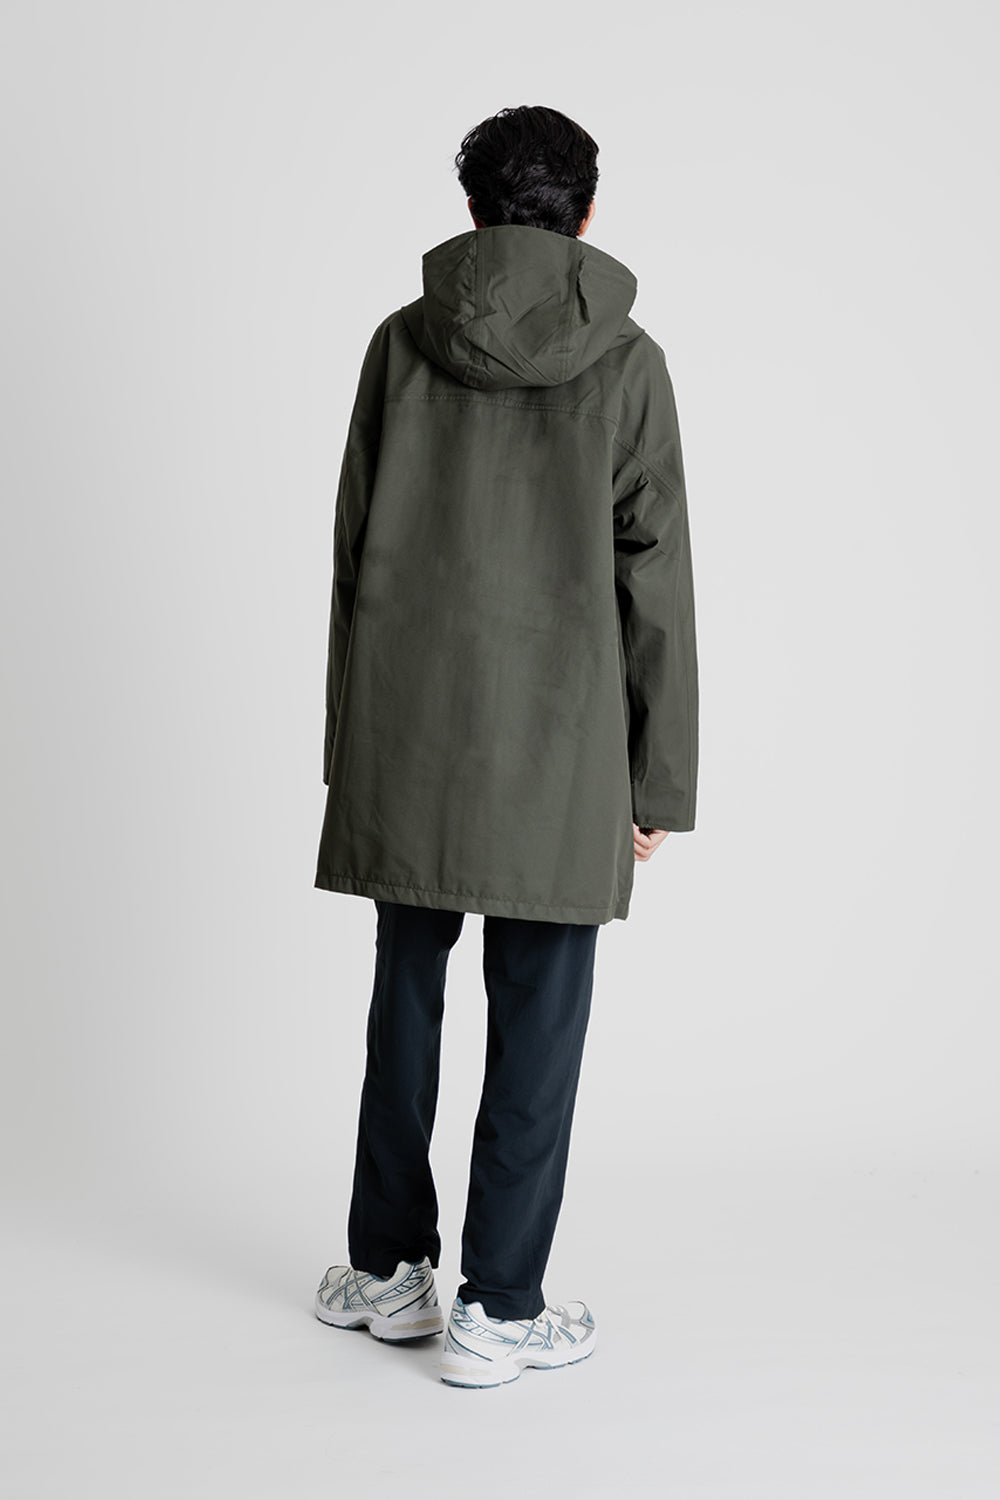 Nanamica 2L GORE-TEX Hooded Coat in Khaki